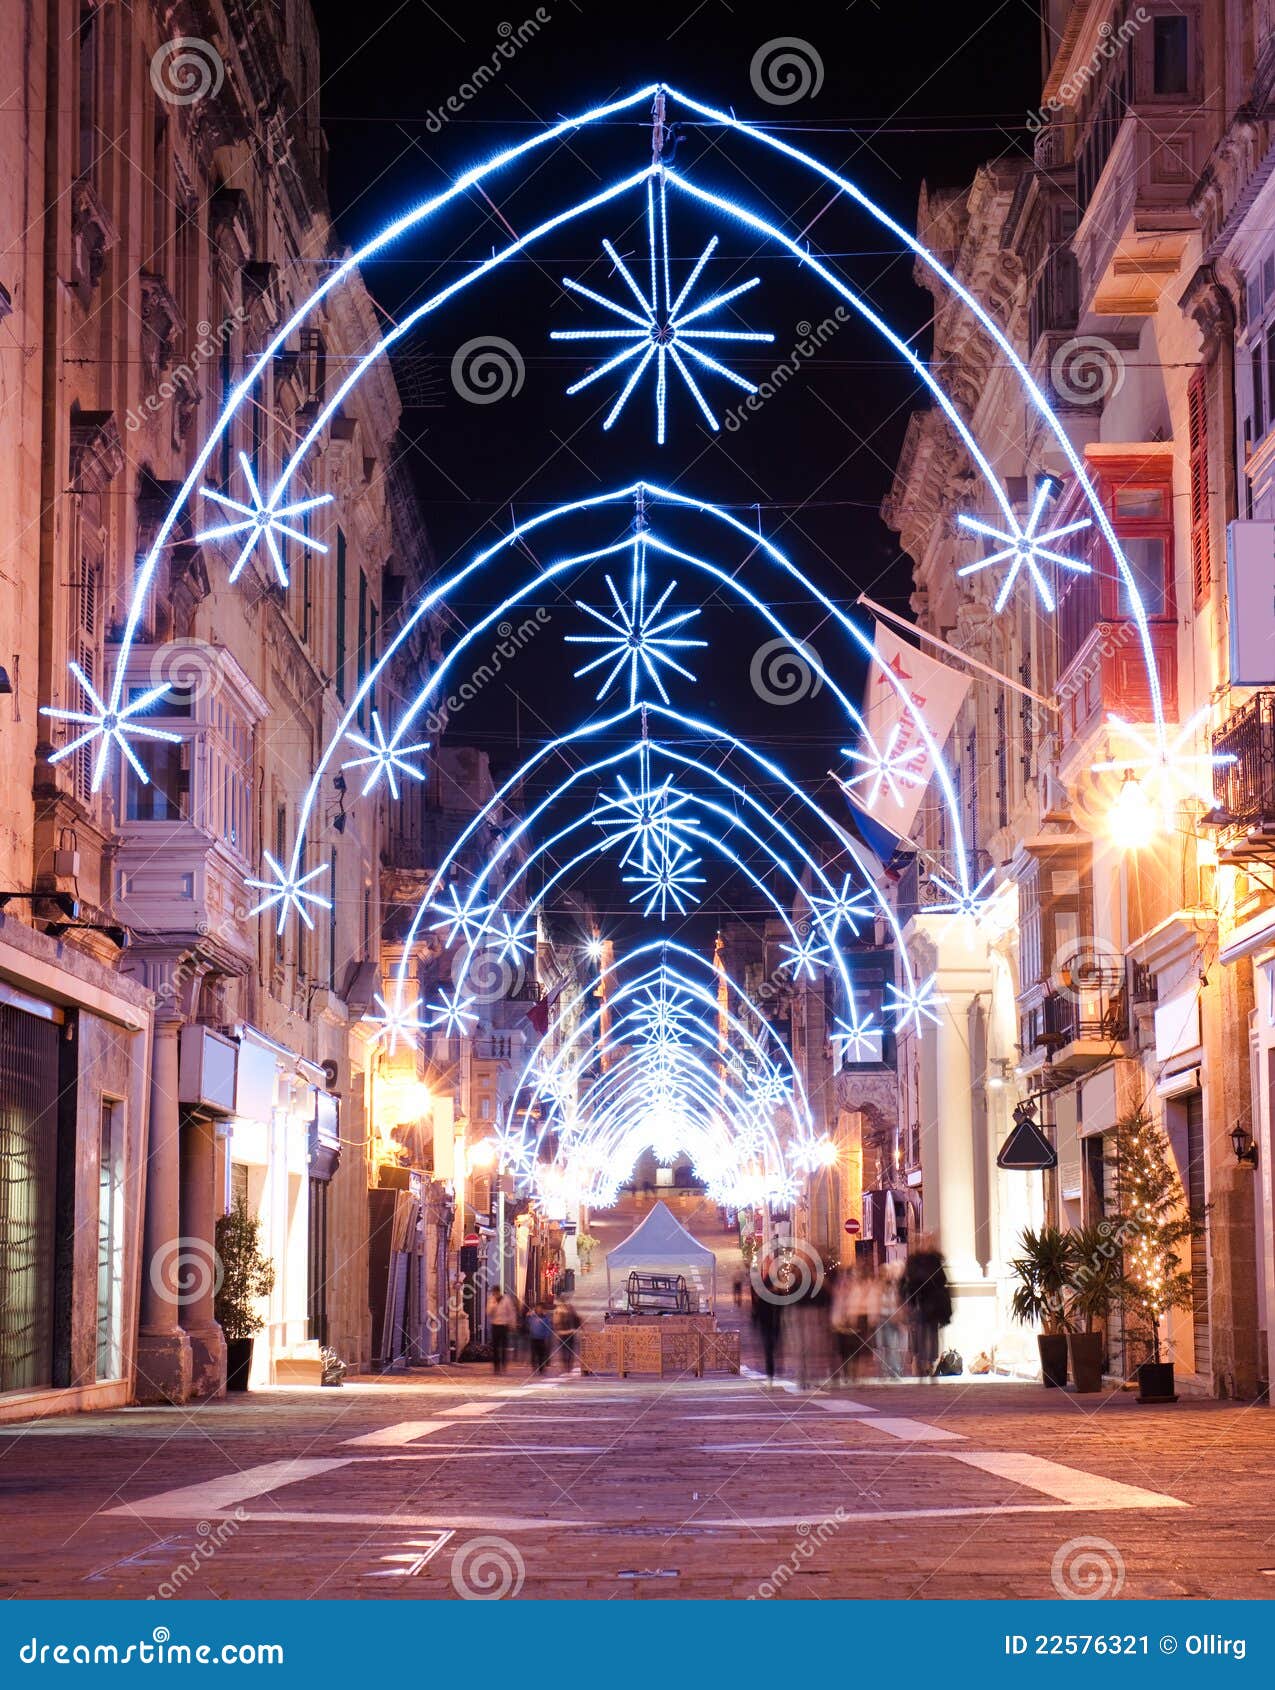 christmas-decoration-valletta-malta-22576321.jpg